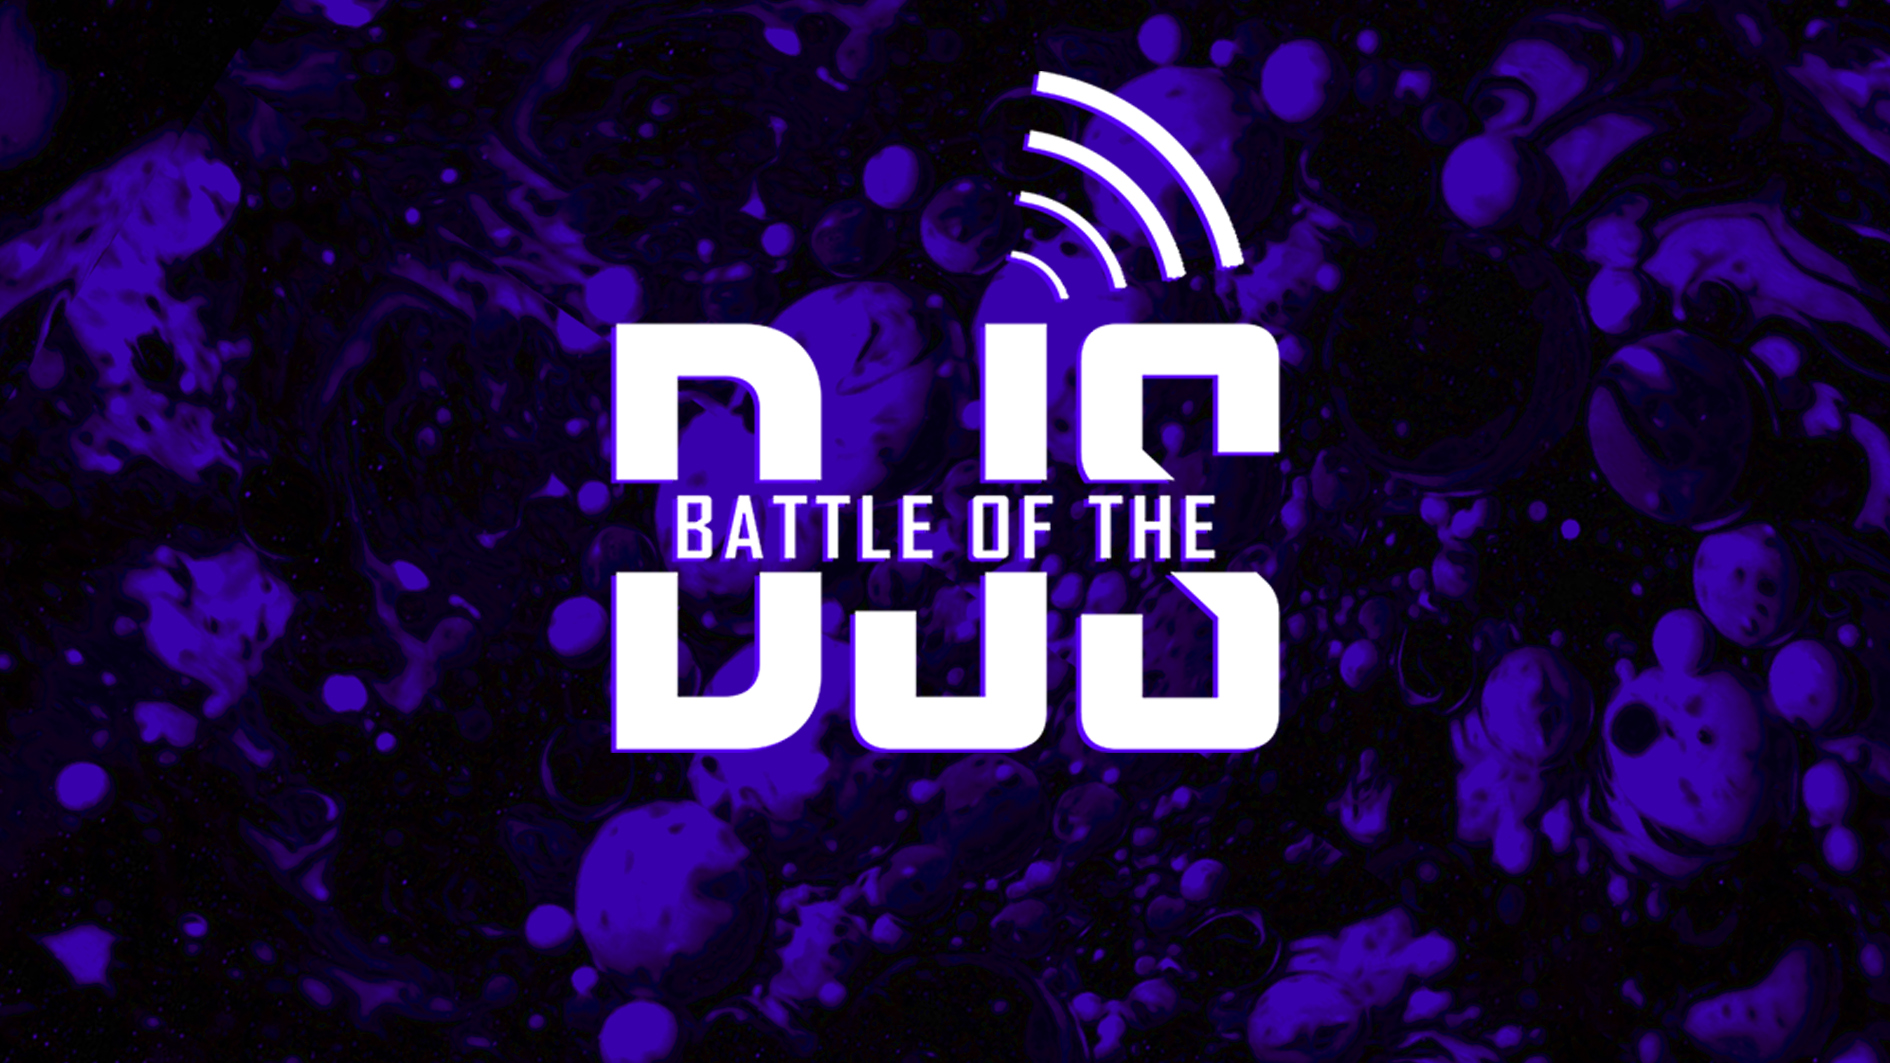 14. Battle of the DJs